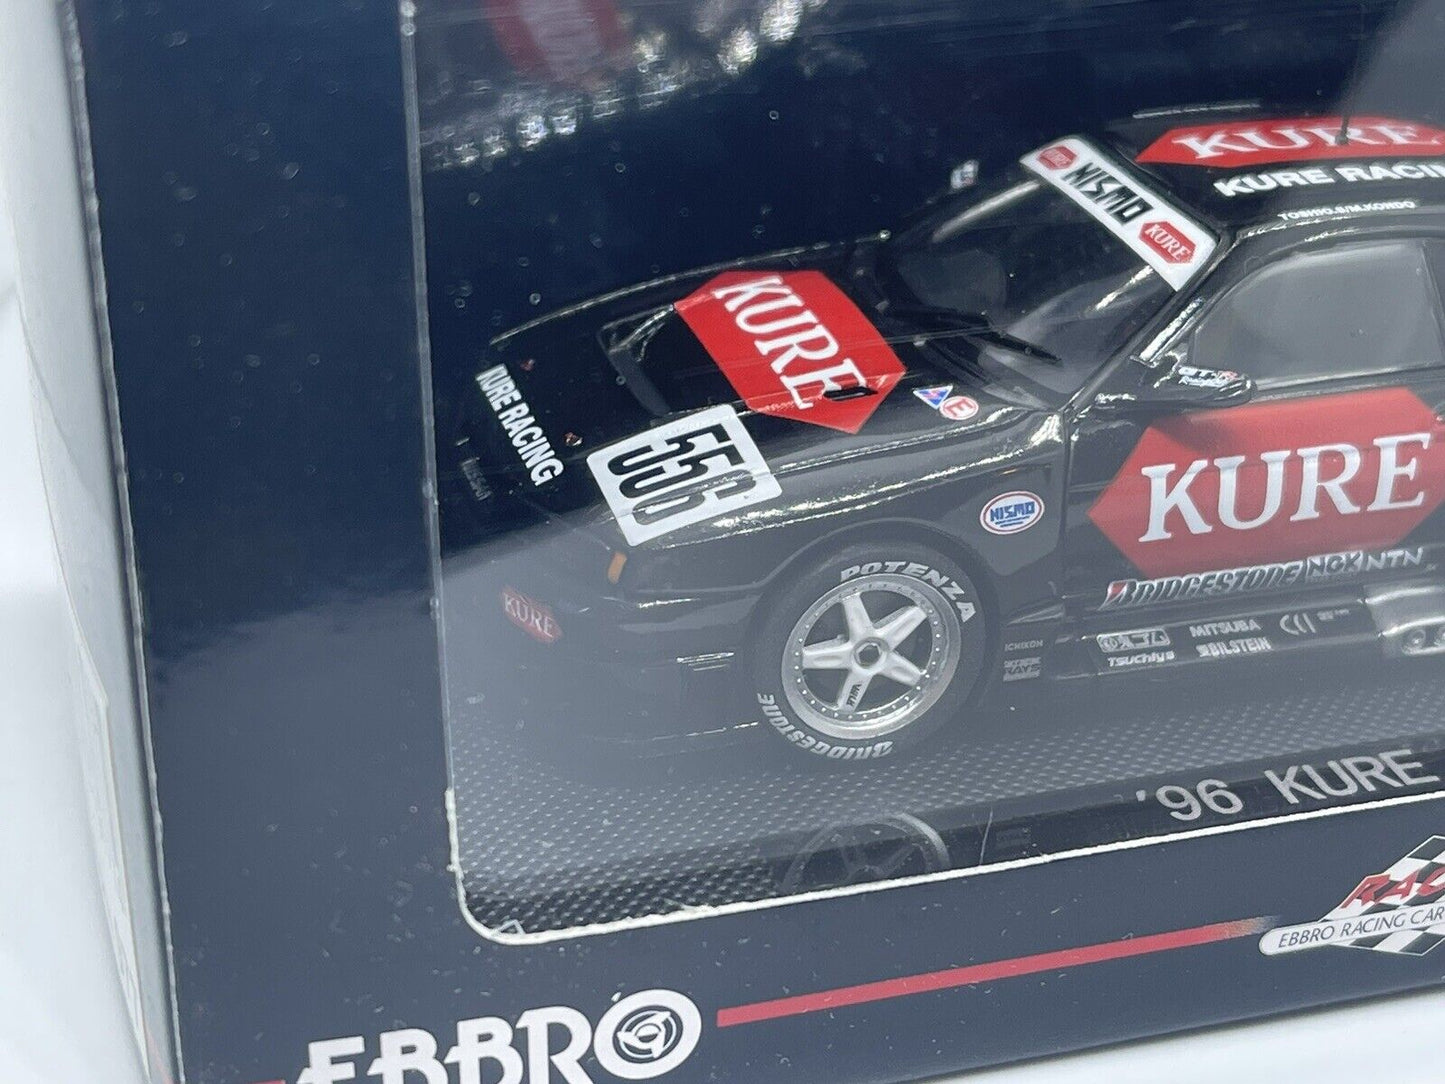 EBBRO - 1996 Nissan Skyline R33 GT-R LM Kure Racing #556 - 1:43 Scale